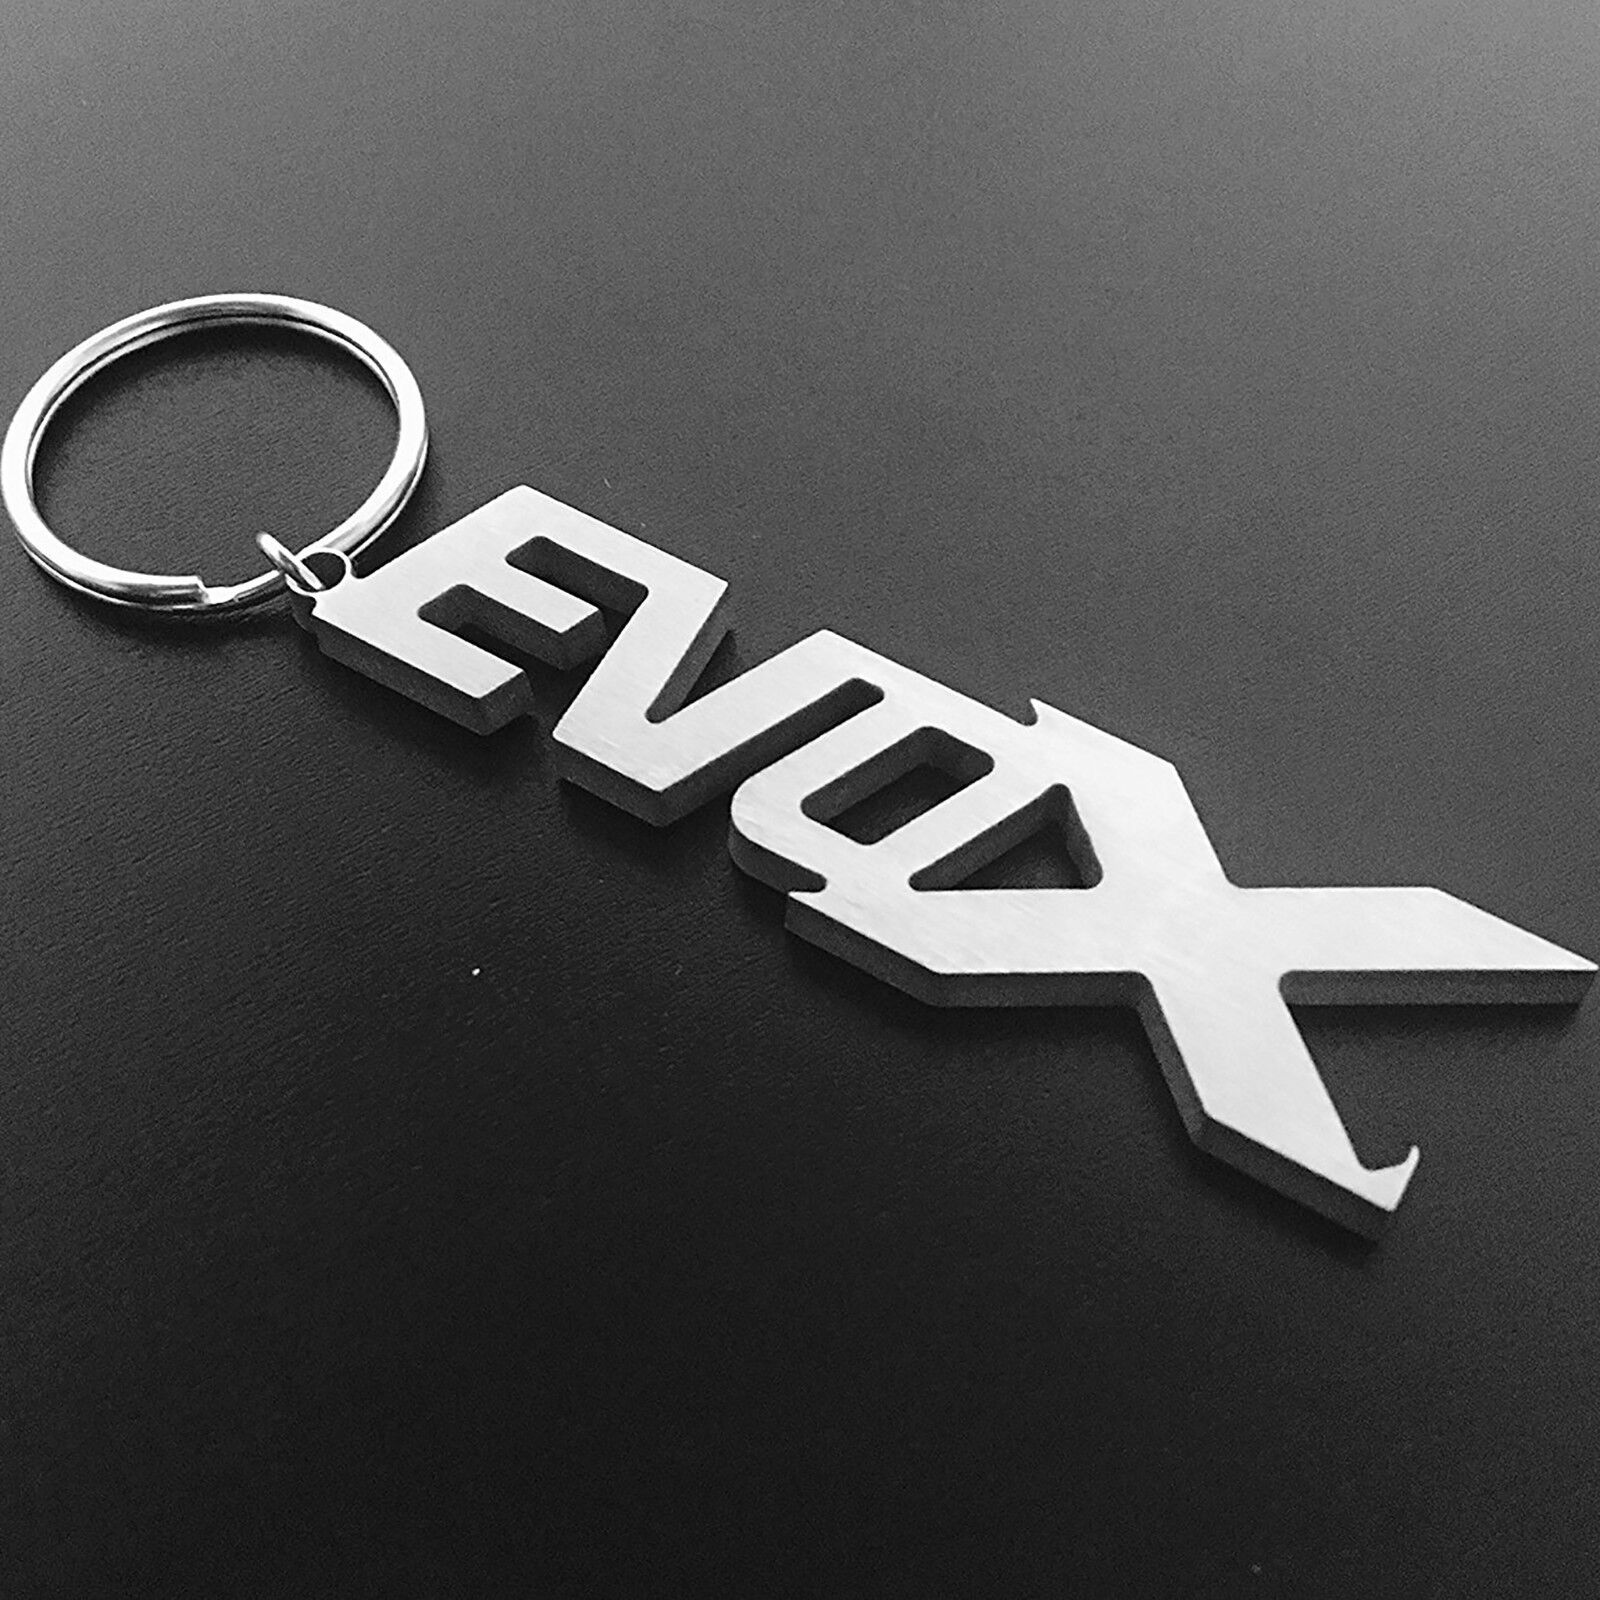 Mitsubishi Lancer Evo X  Key Chain with Opener, Stainless Steel